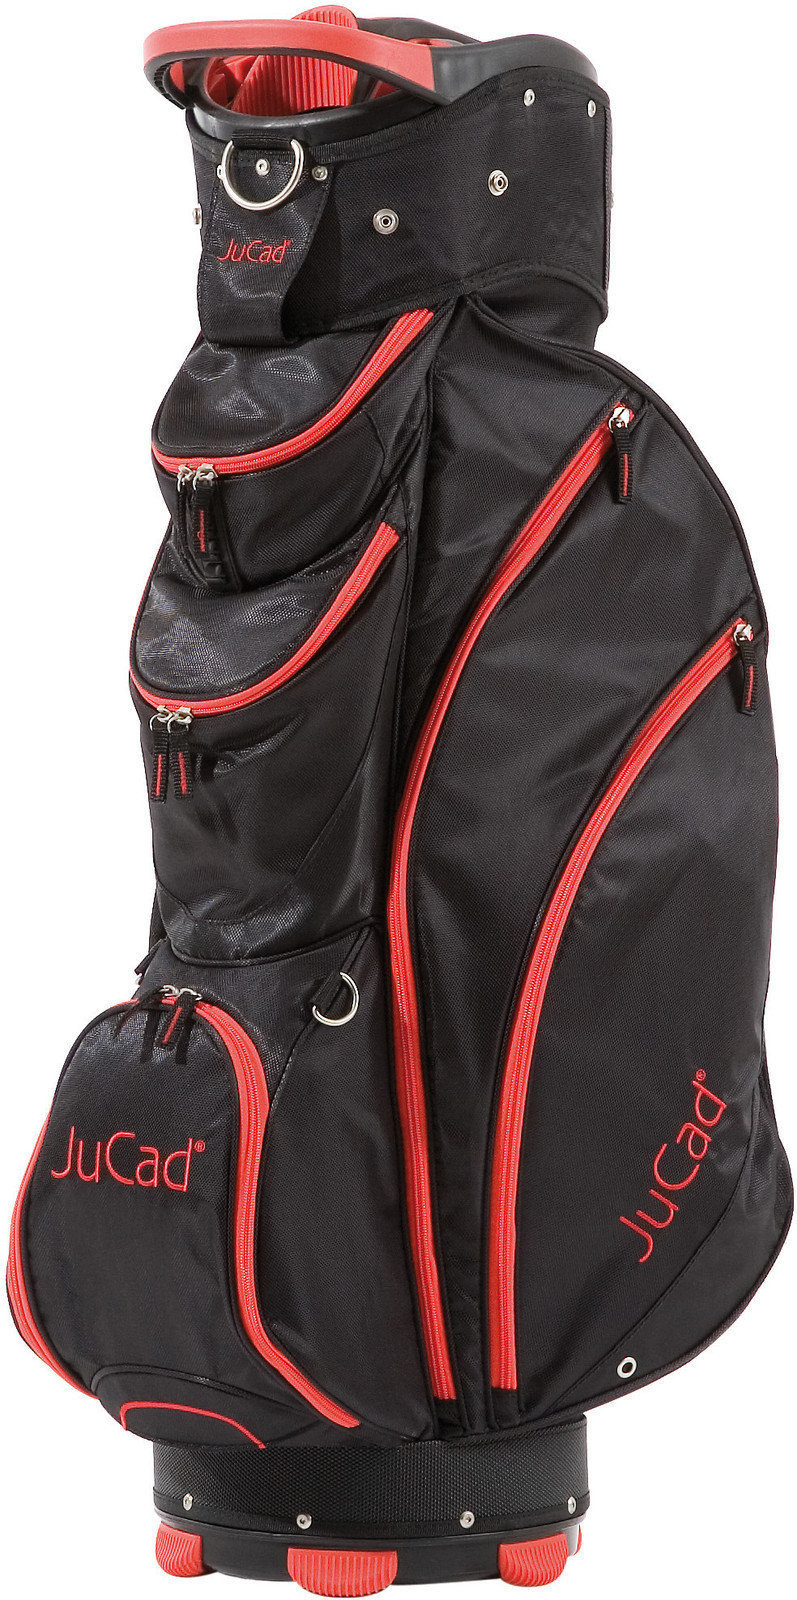 Cart Bag Jucad Spirit Black/Zipper Red Cart Bag